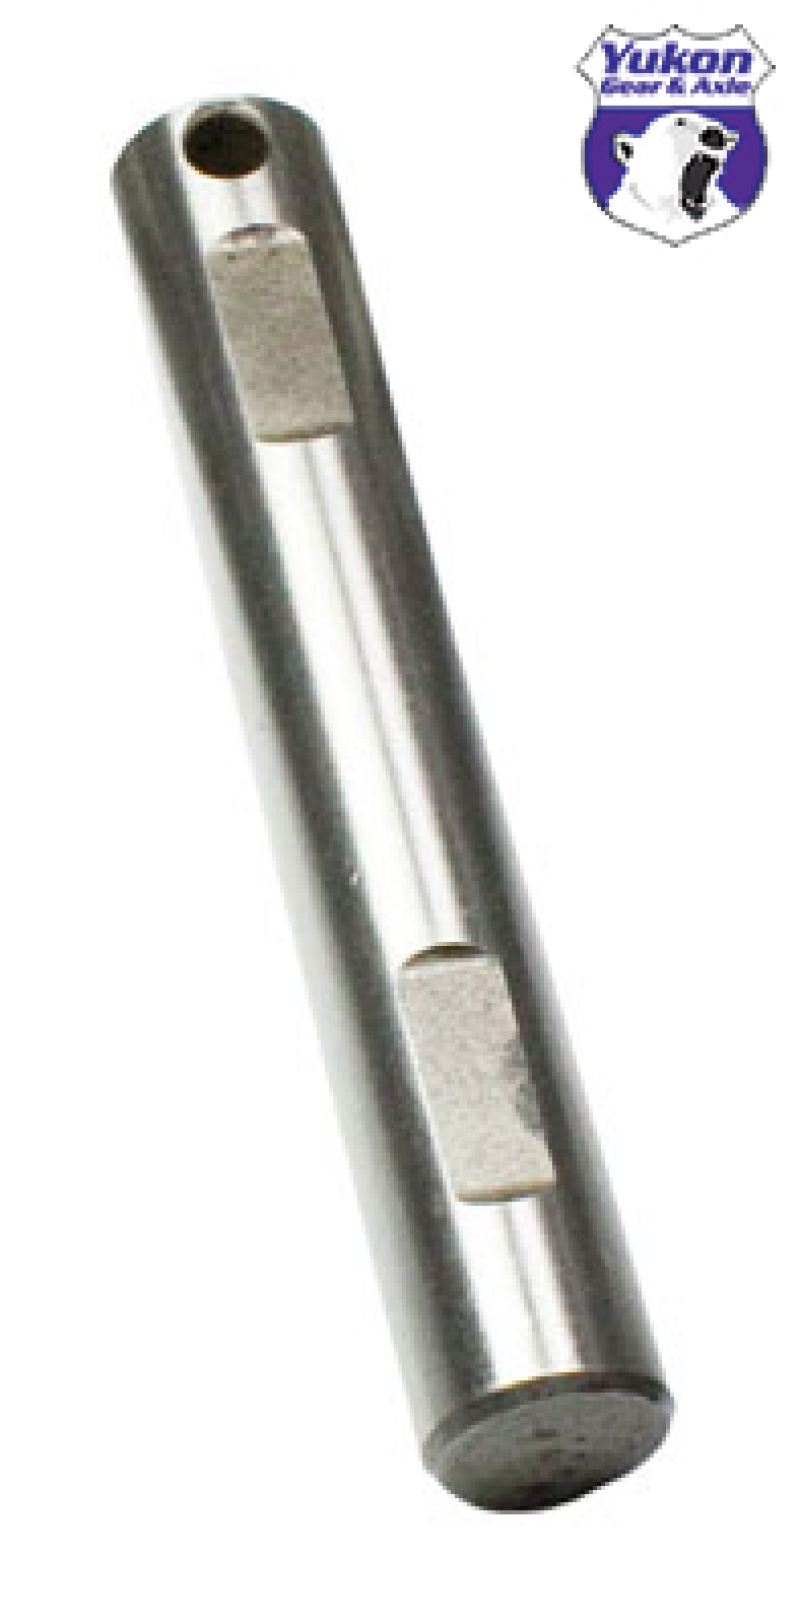 USA Standard Spartan Locker Replacement Cross Pin For Dana 44HD - SL XP-D44HD